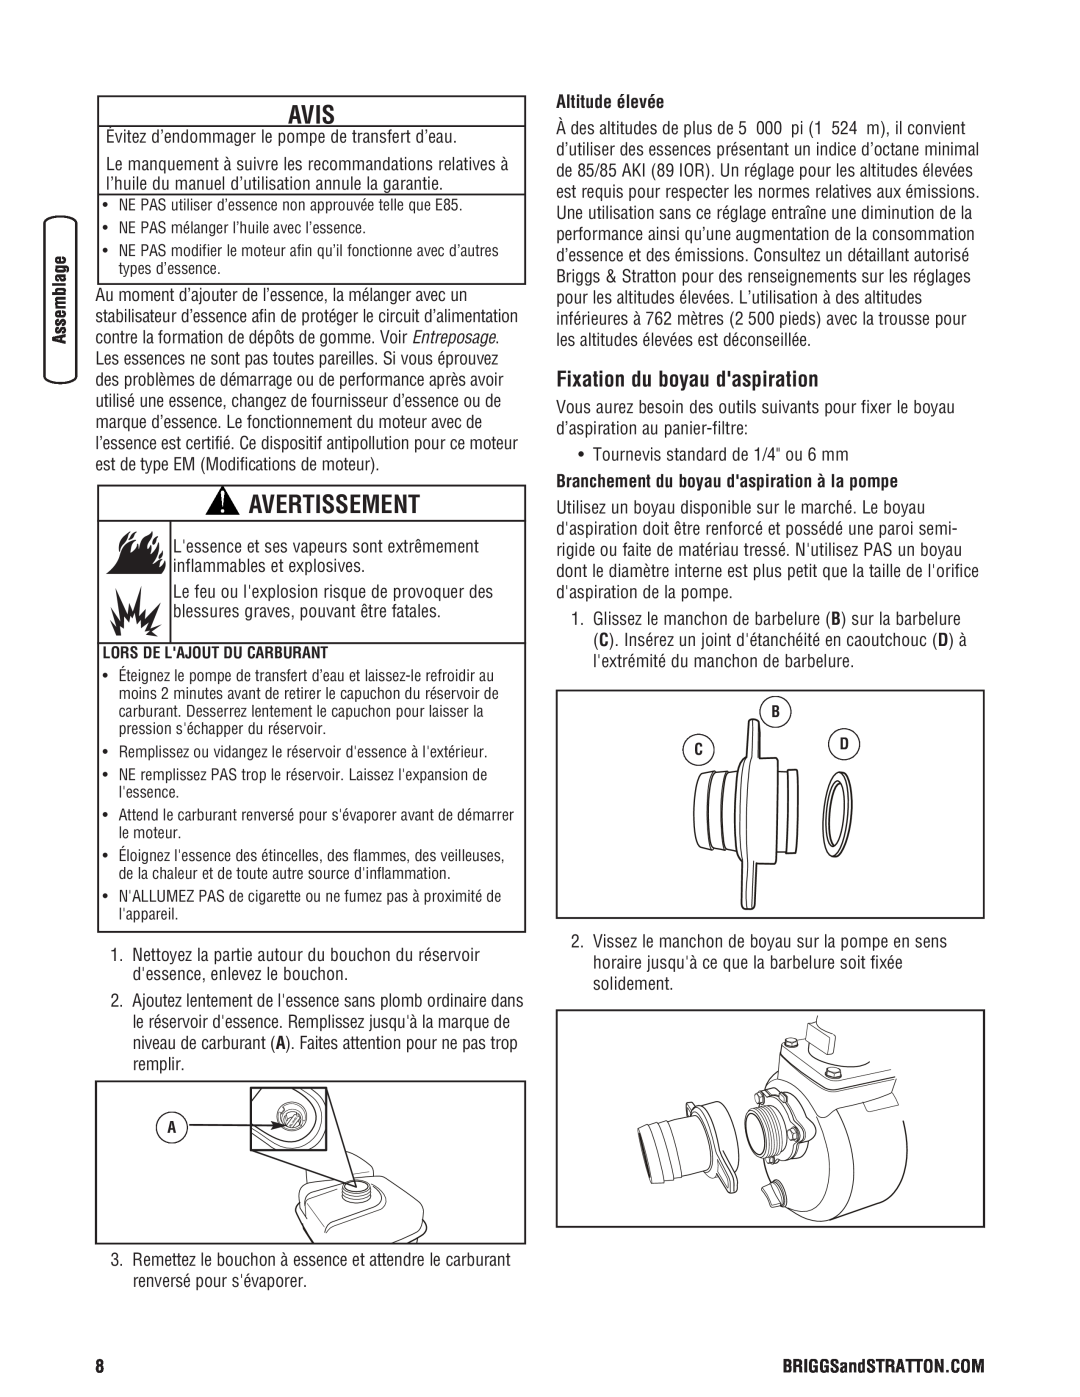 Briggs & Stratton Water Transfer Pump manual Fixation du boyau daspiration, Altitude élevée, Avis, Avertissement 